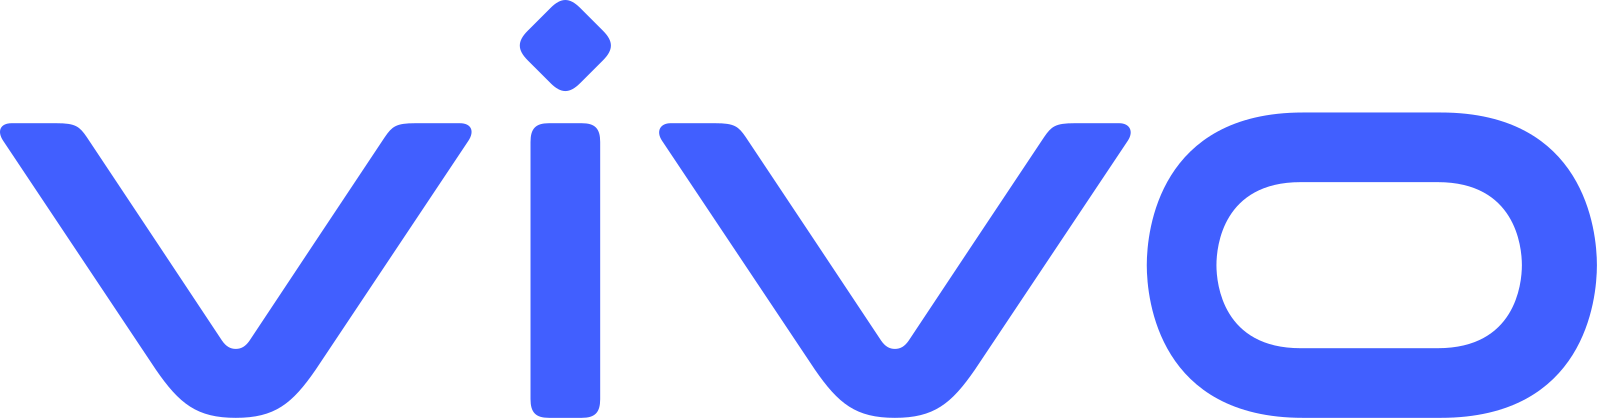 Vivo_logo_2019.svg_.png